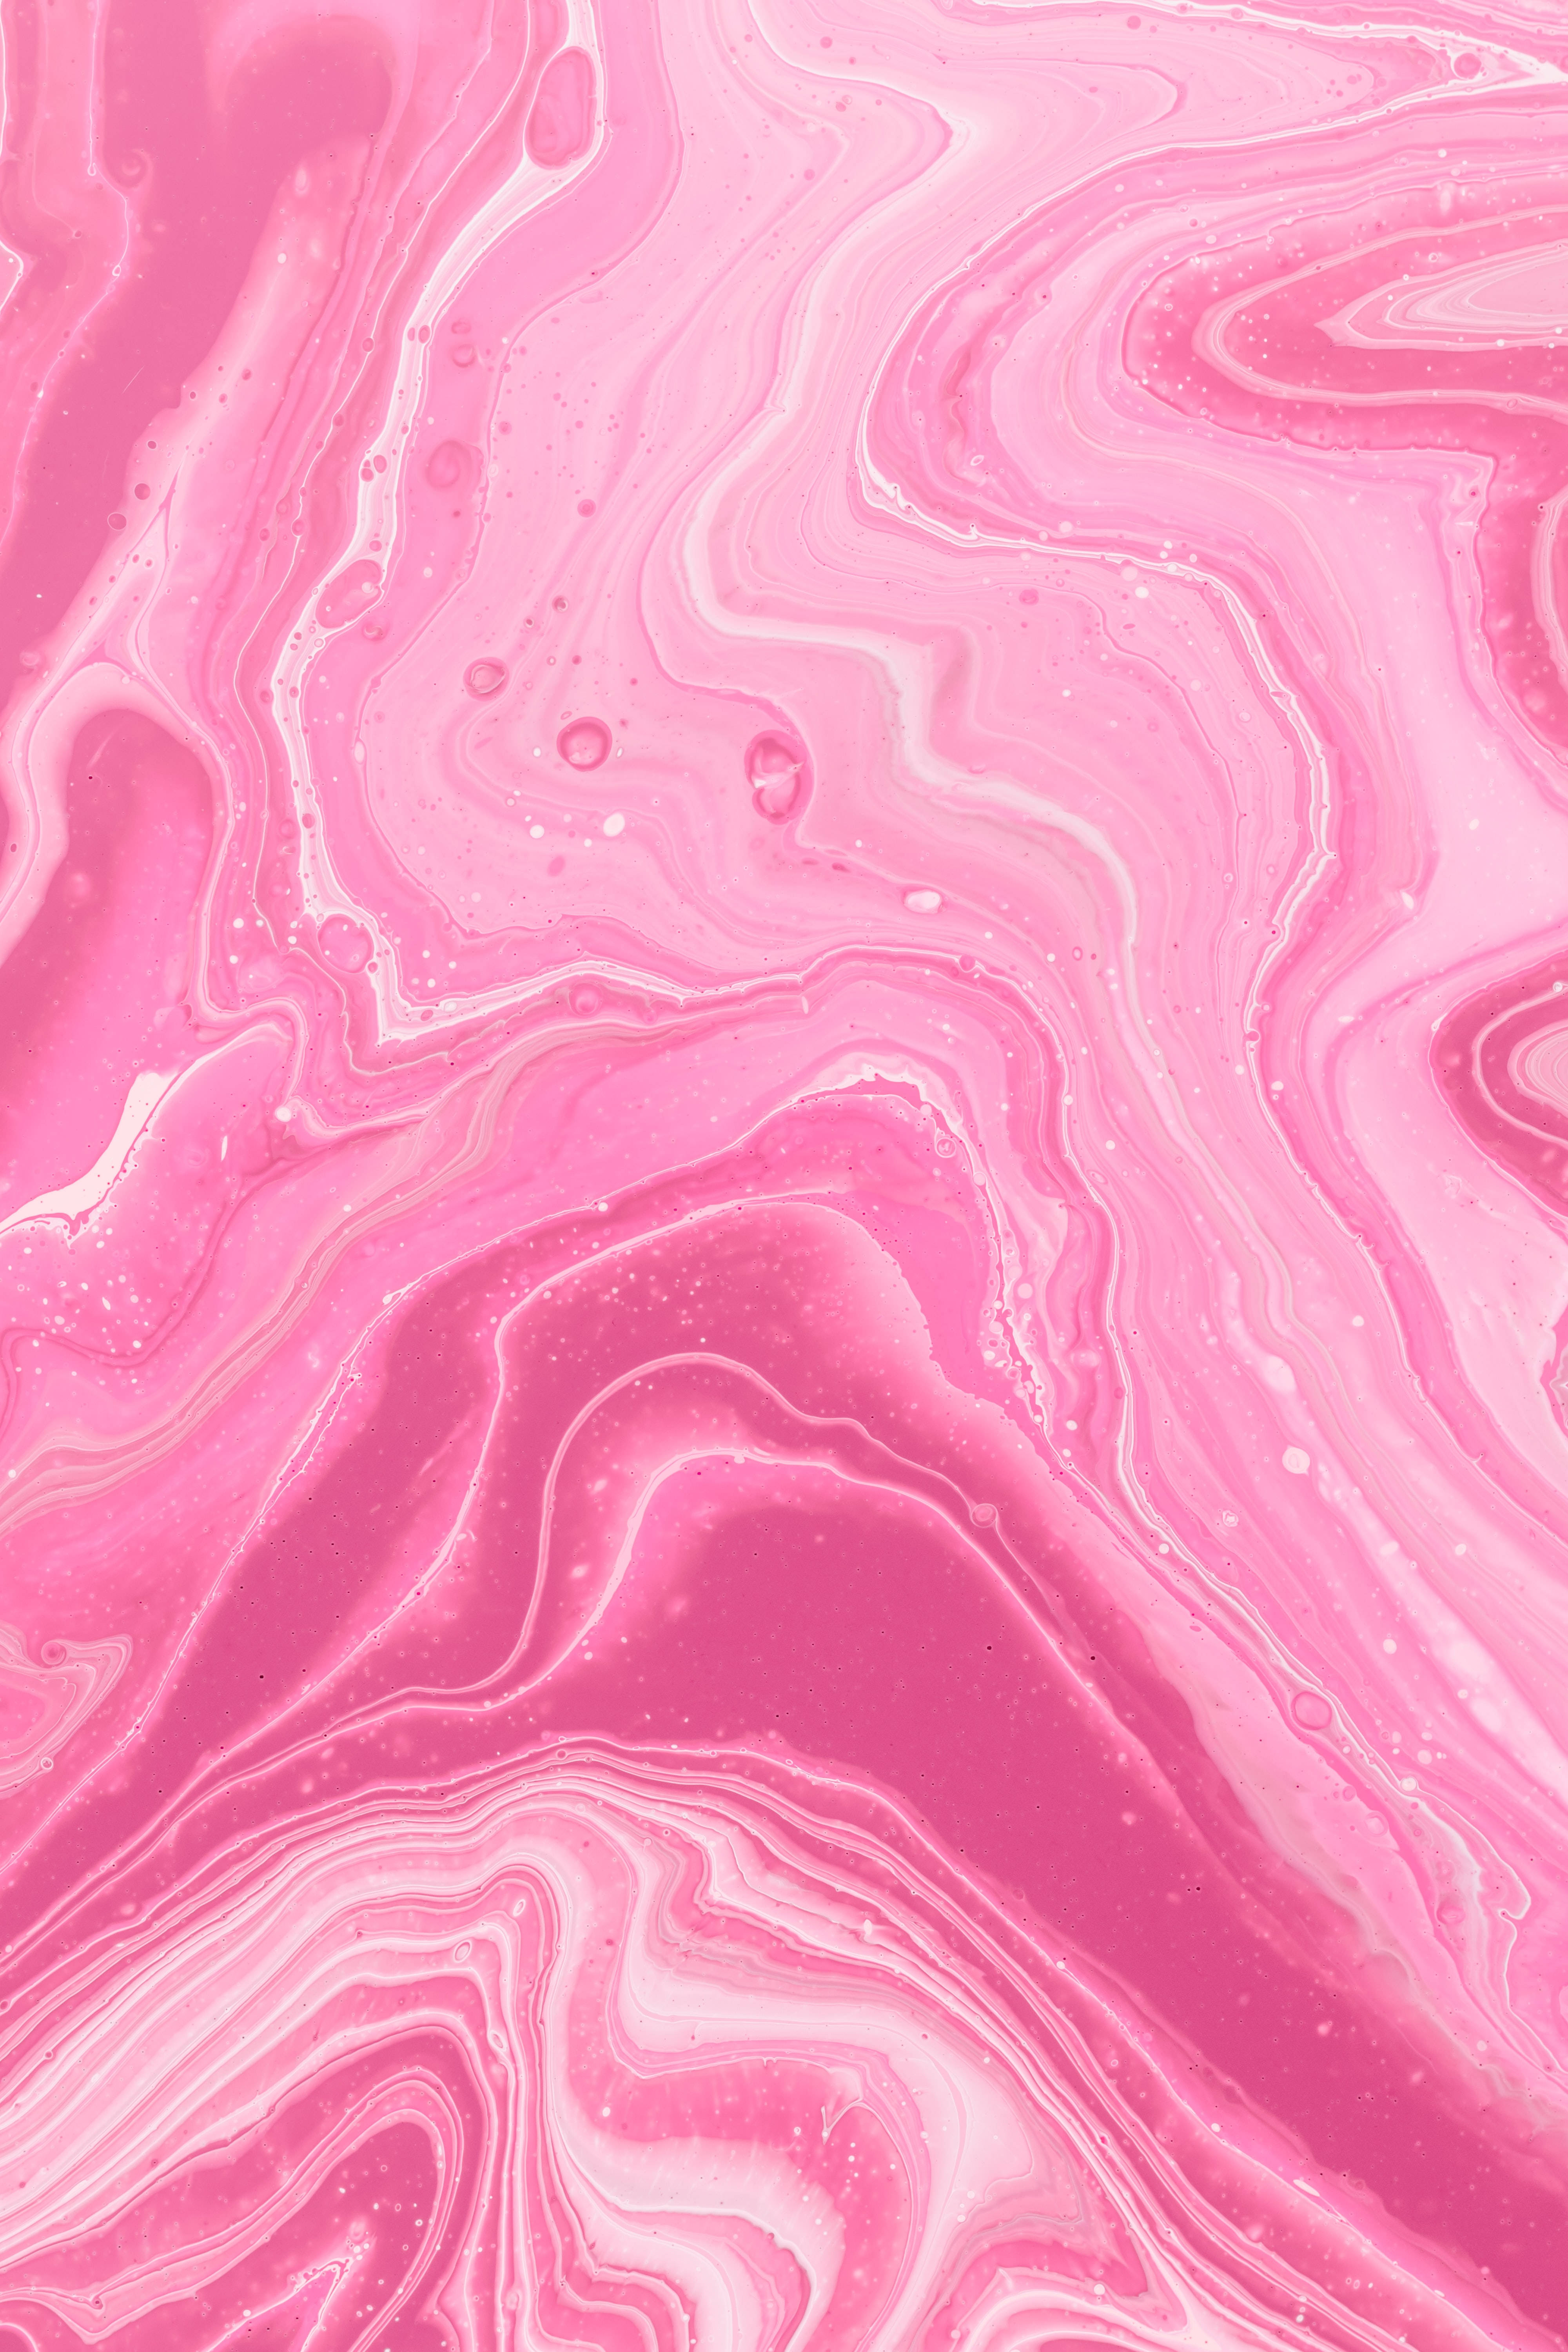 Pink Aesthetic Swirly Marble 4k Wallpaper